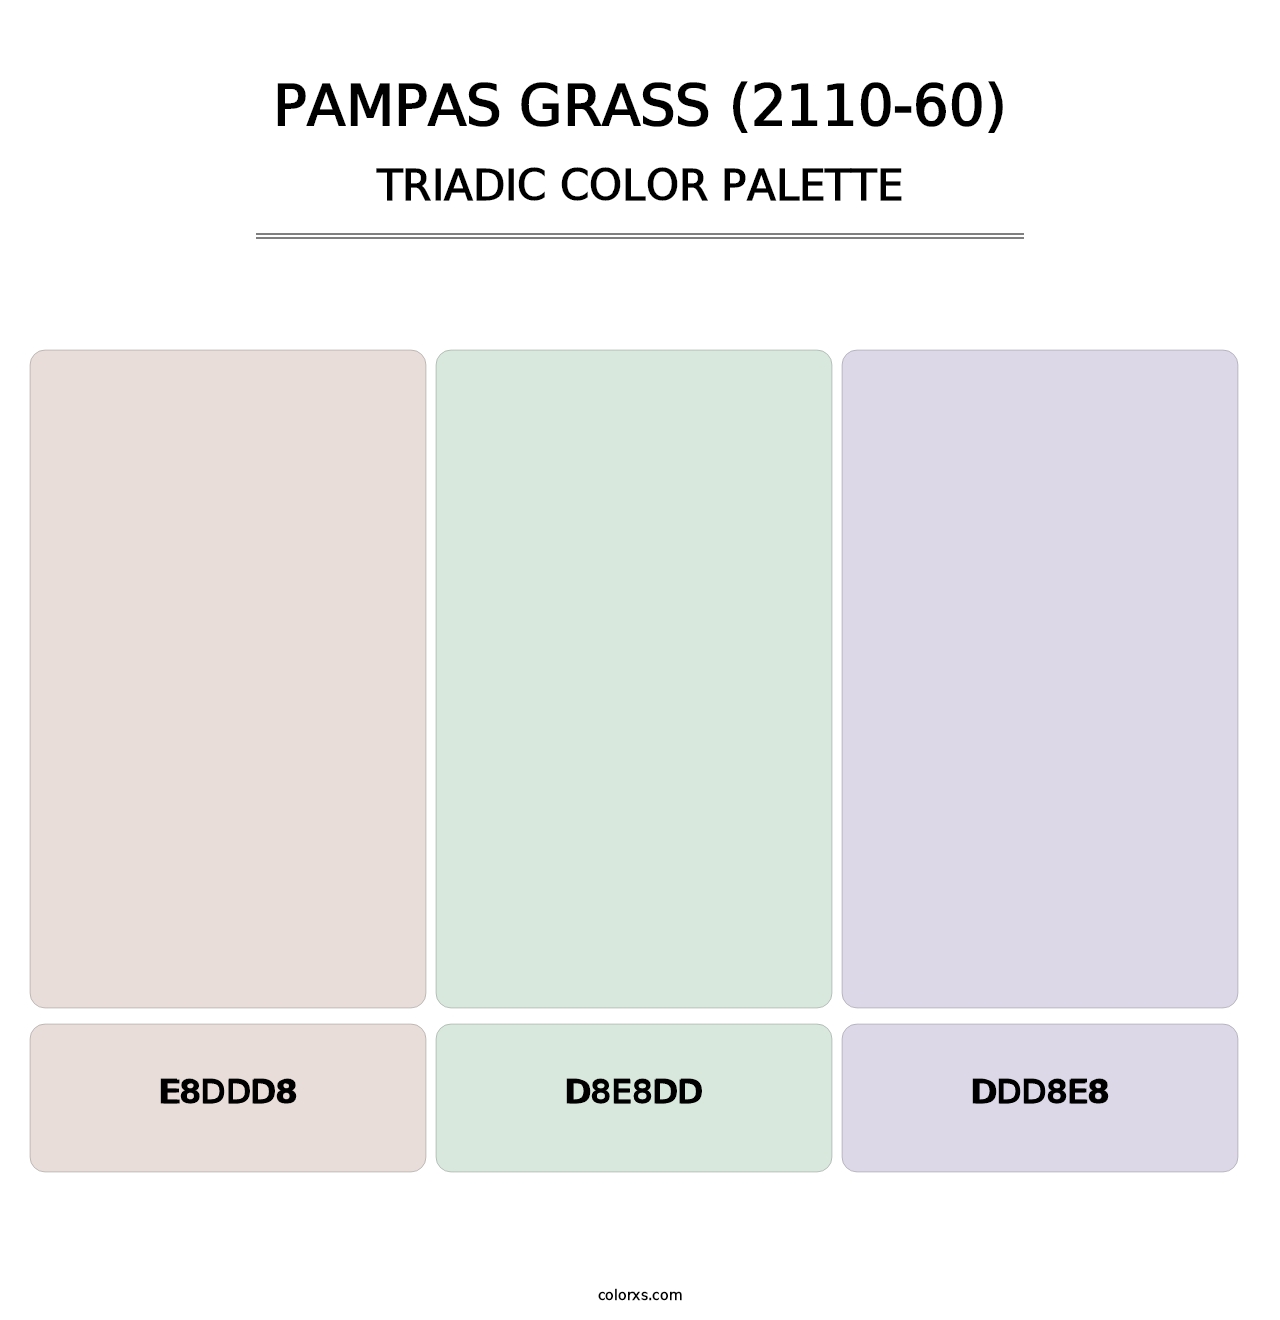 Pampas Grass (2110-60) - Triadic Color Palette